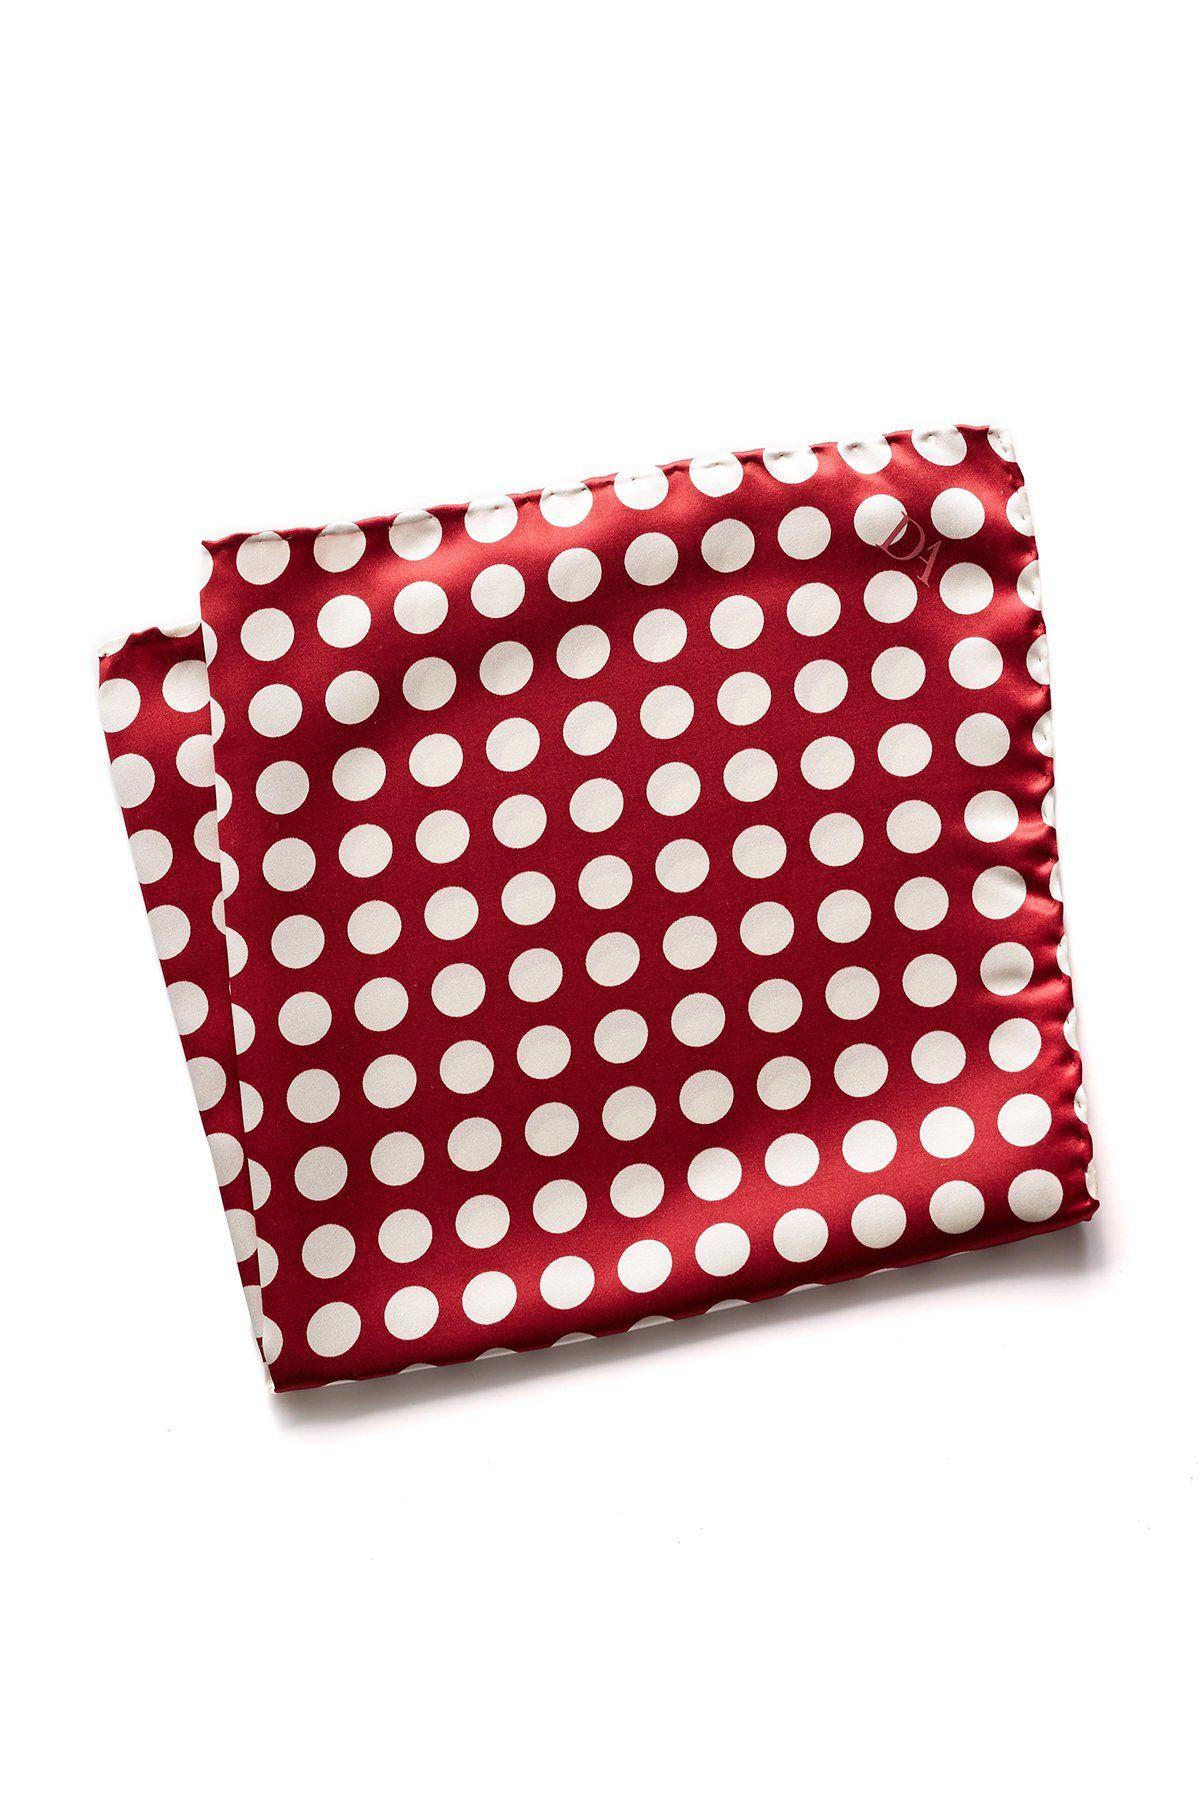 Italian Red White Square Logo - David August Red With White Polka Dot Italian Silk Pocket Square